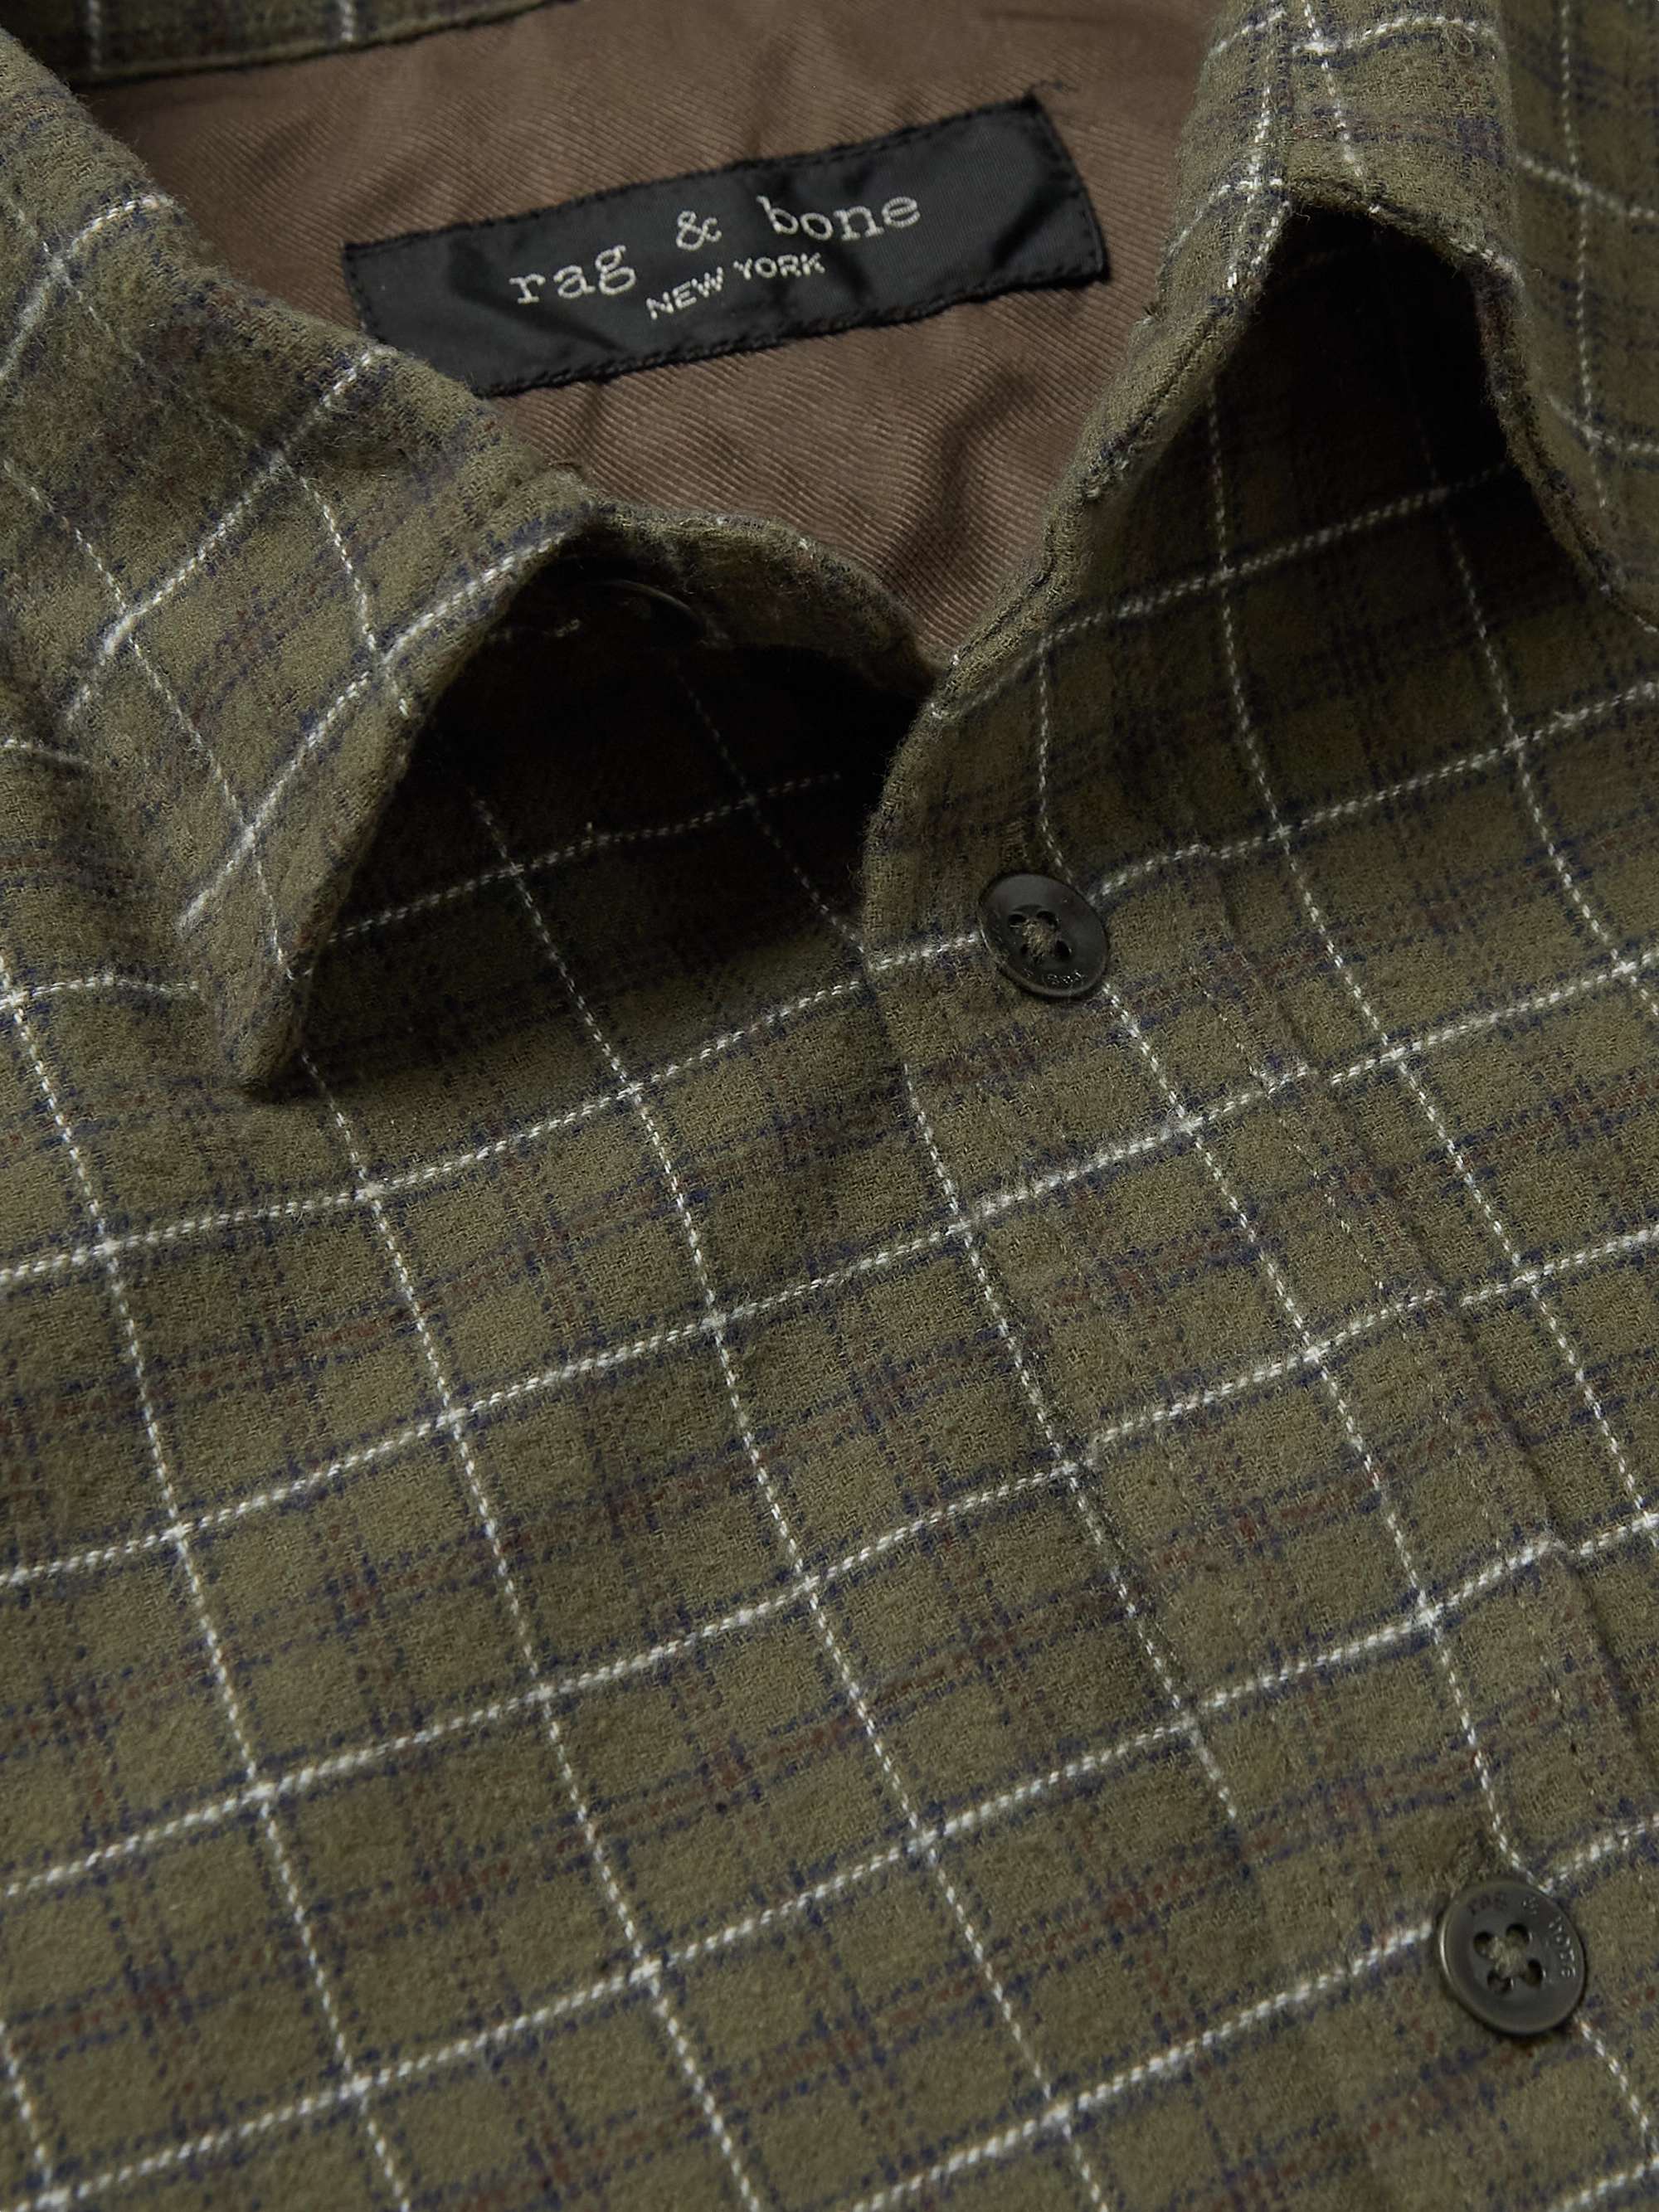 RAG & BONE Fit 2 Checked Cotton-Flannel Shirt